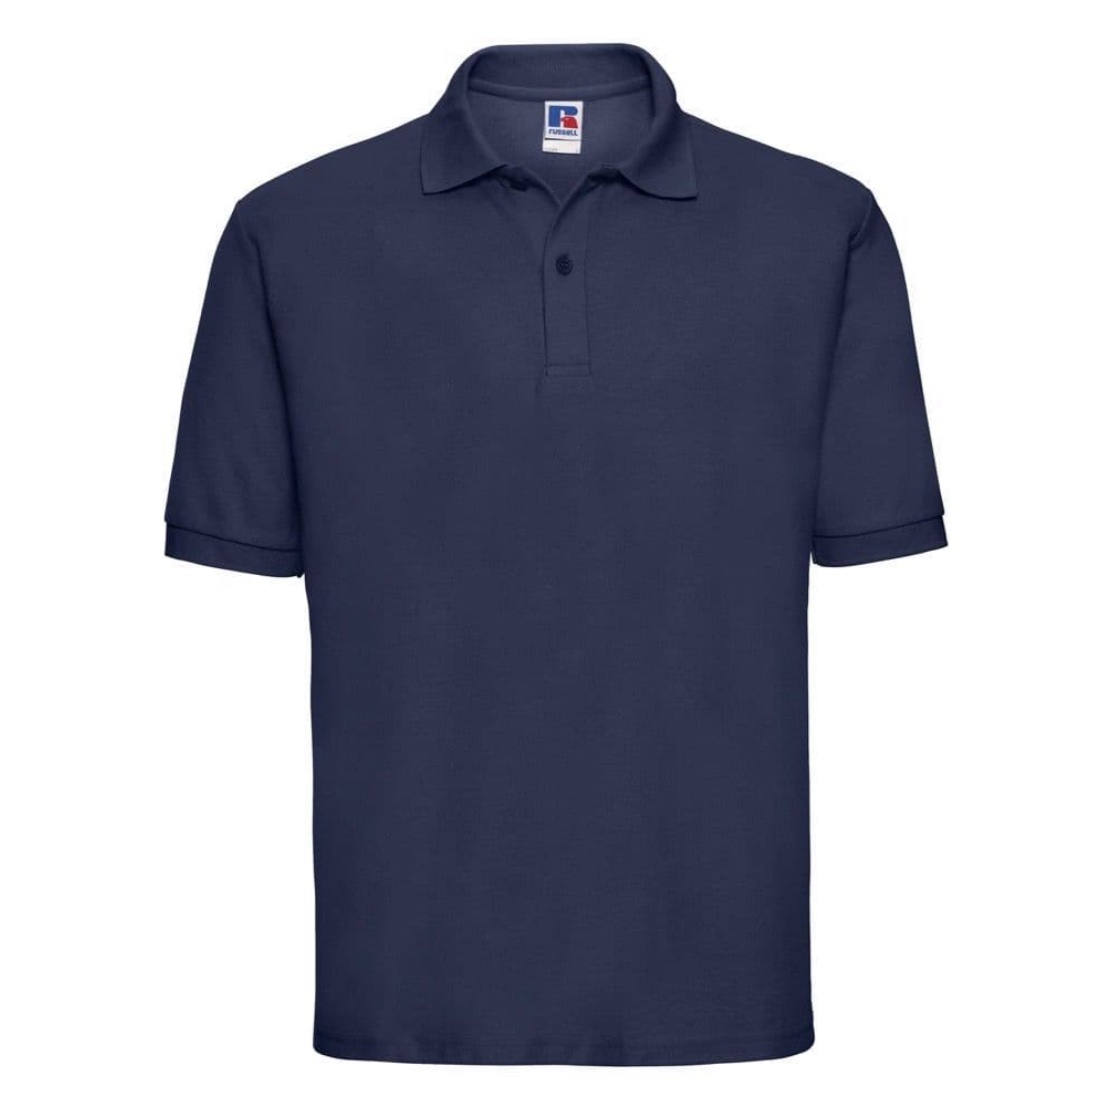 2 x Unisex Navy Blue Plain Polo Shirt, Short Sleeve 5-6 Y